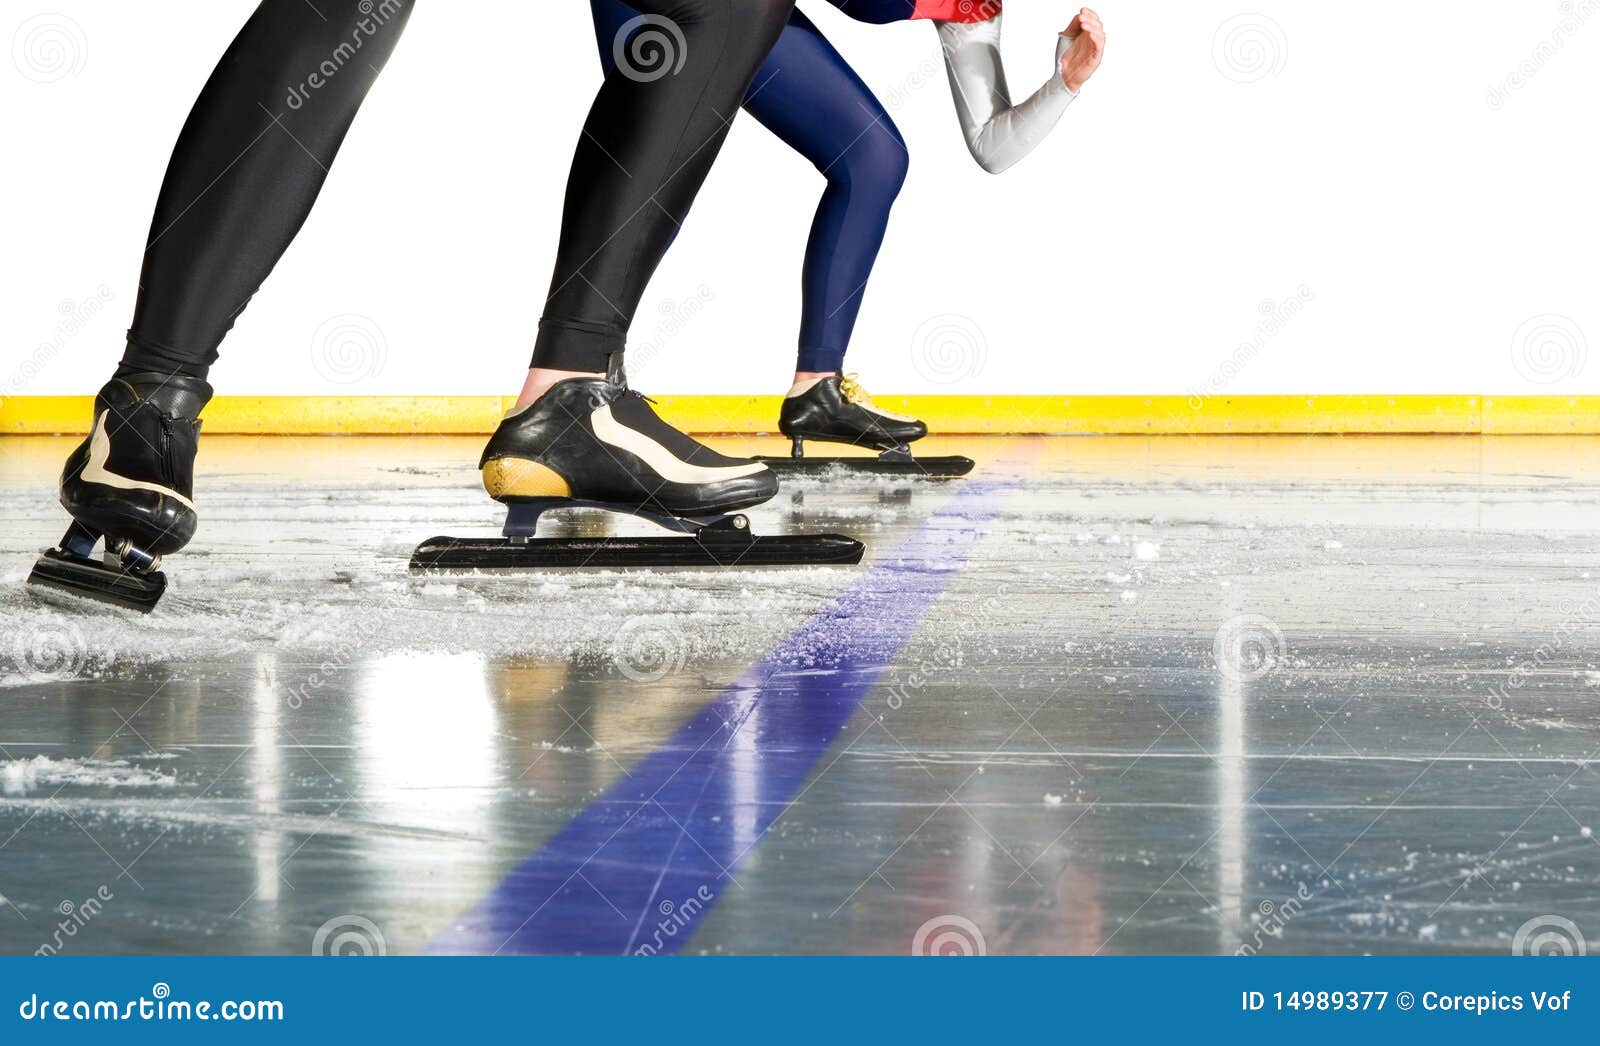 speed skating start